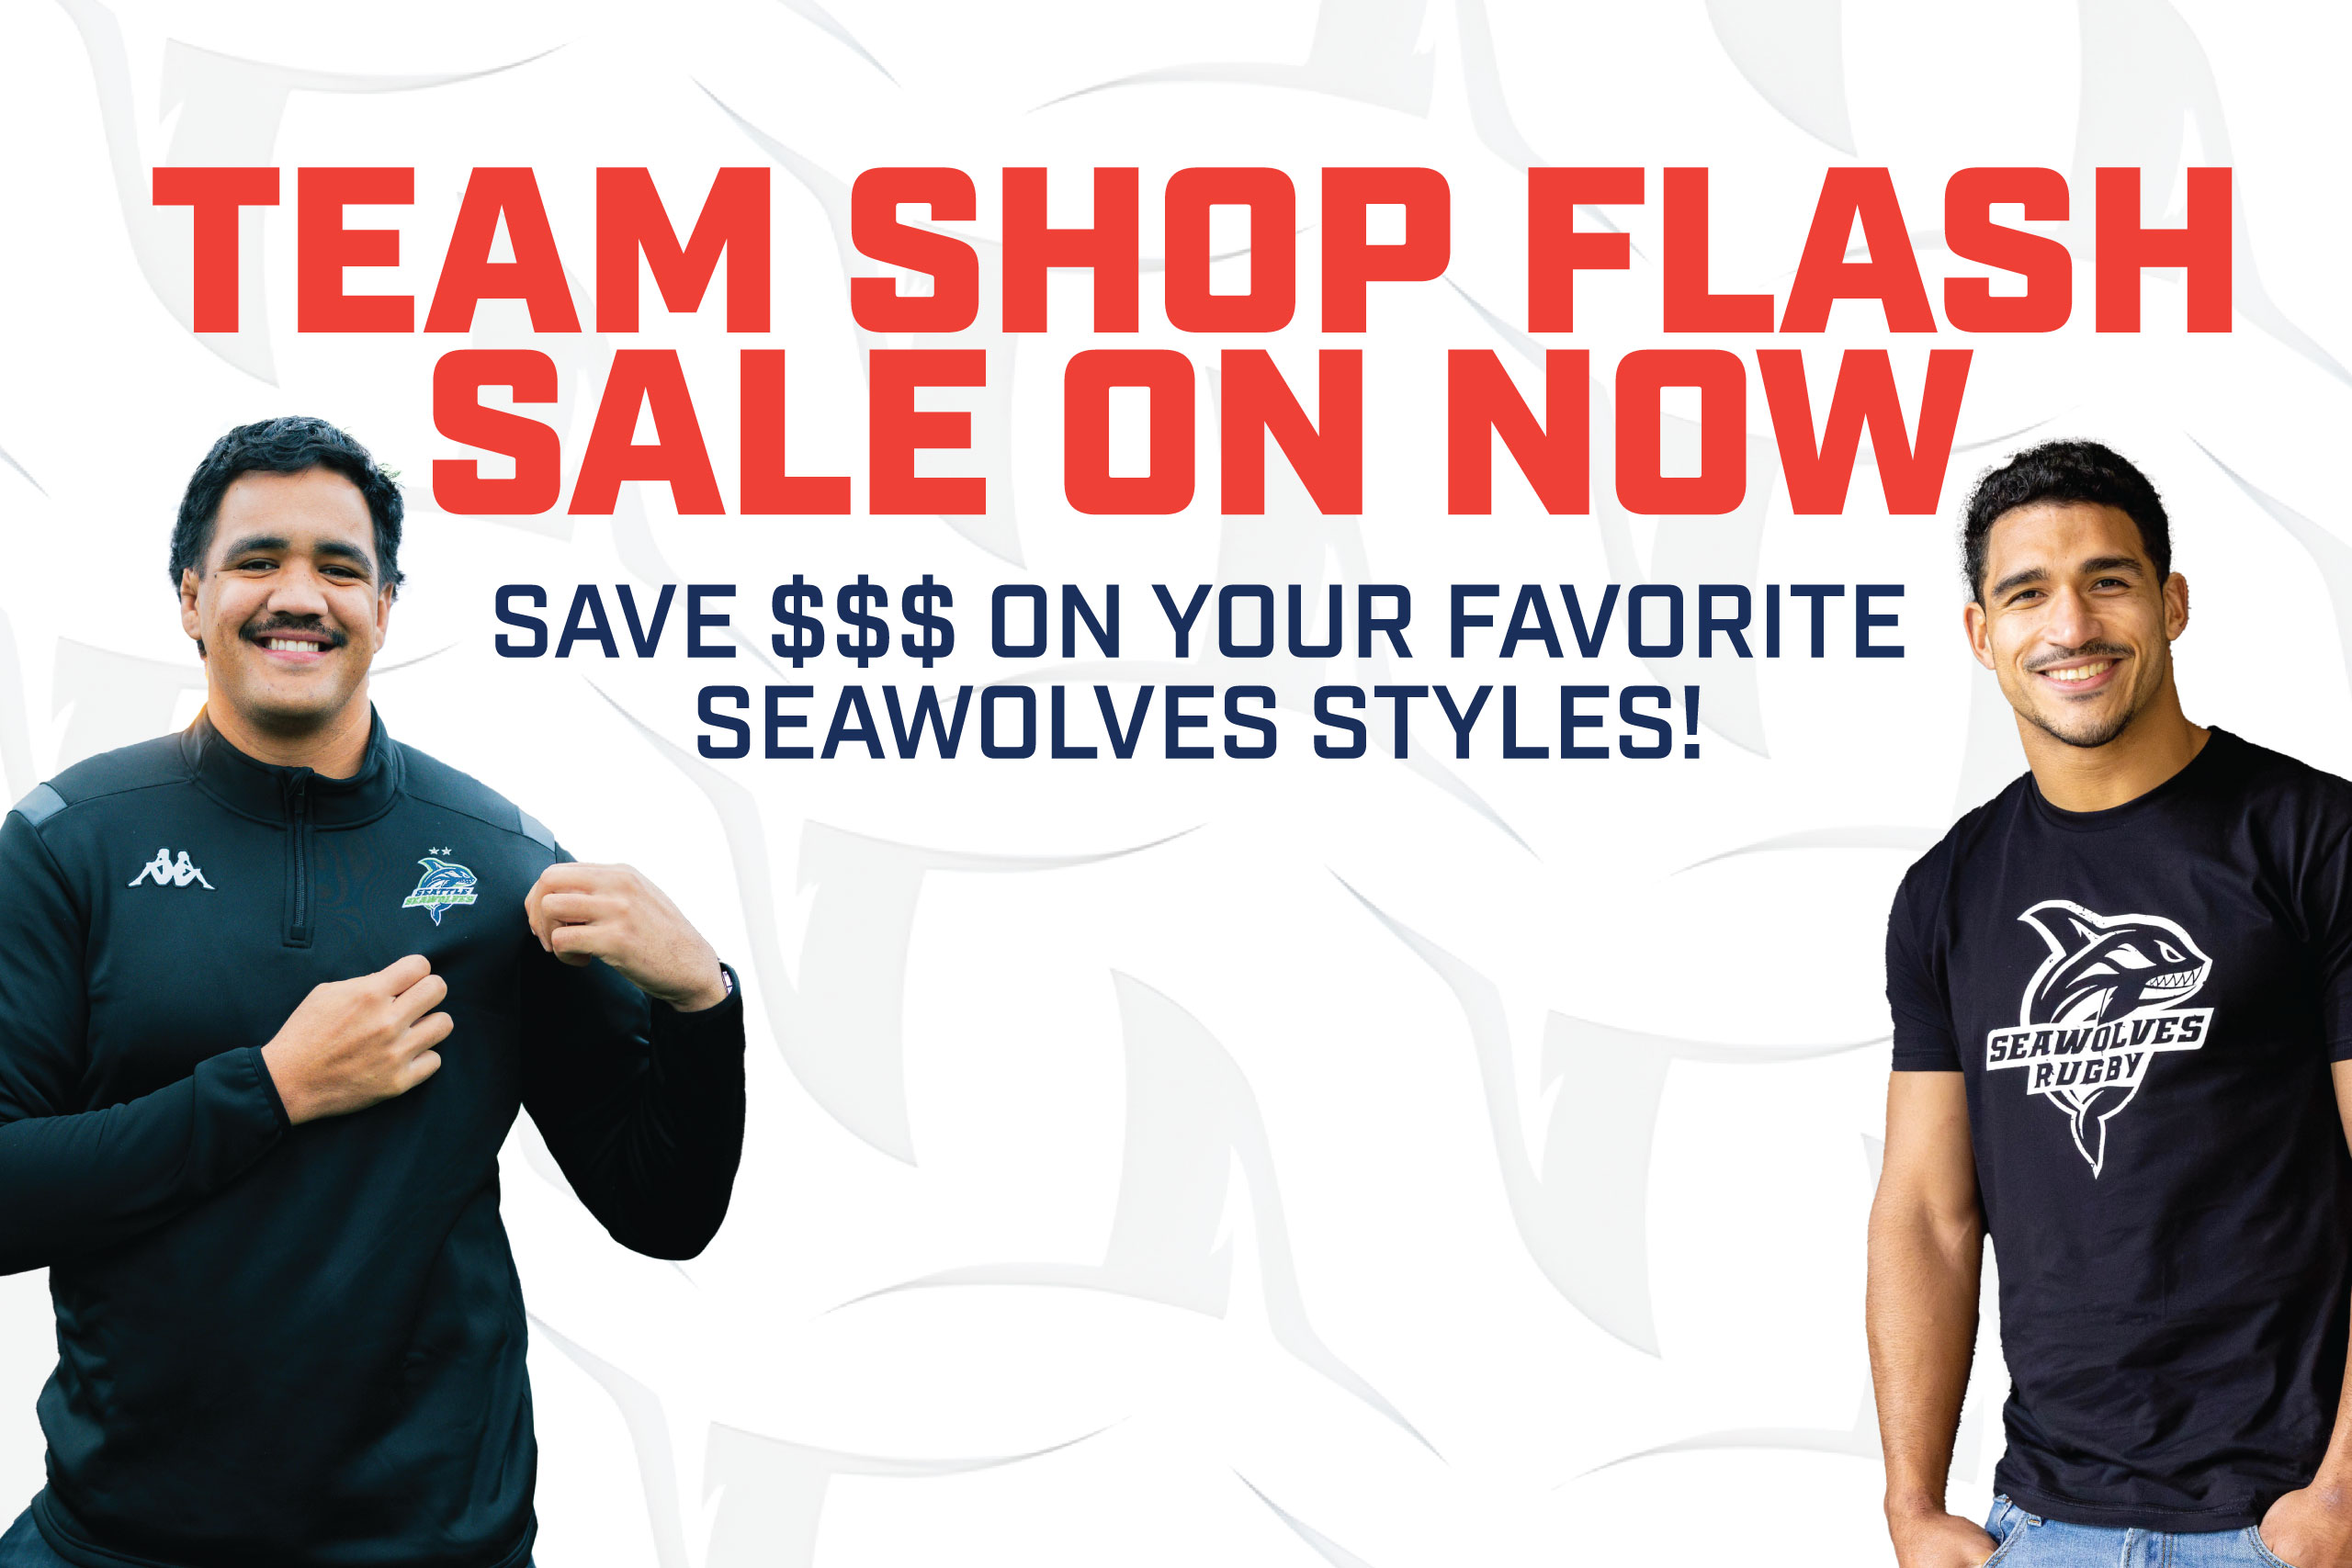 Seawolves Team Shop Flash Sale On Now